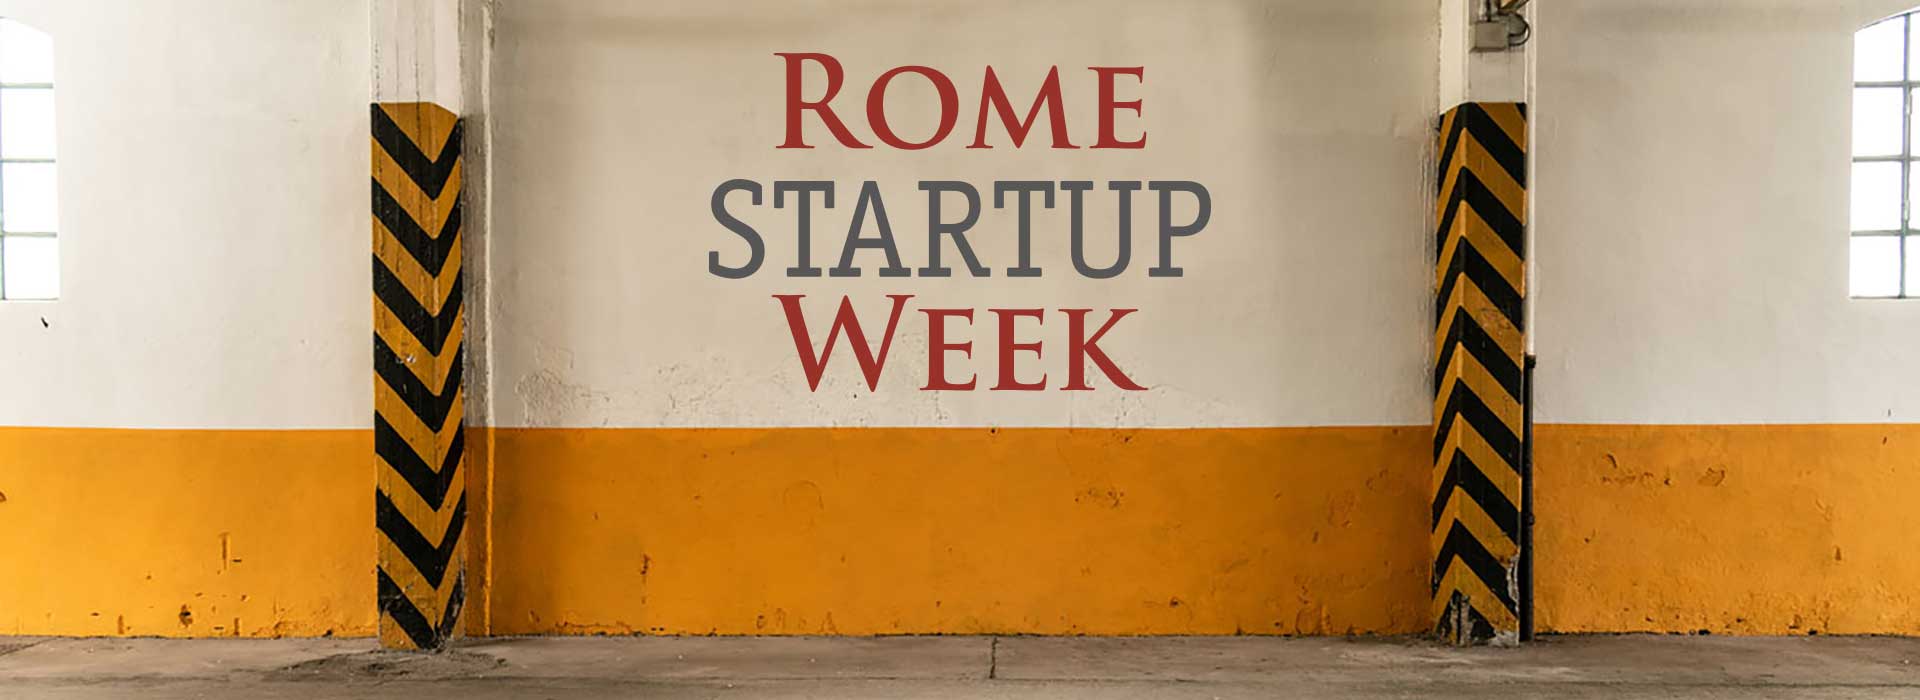 Rome Startup Week 2019, #rsw19